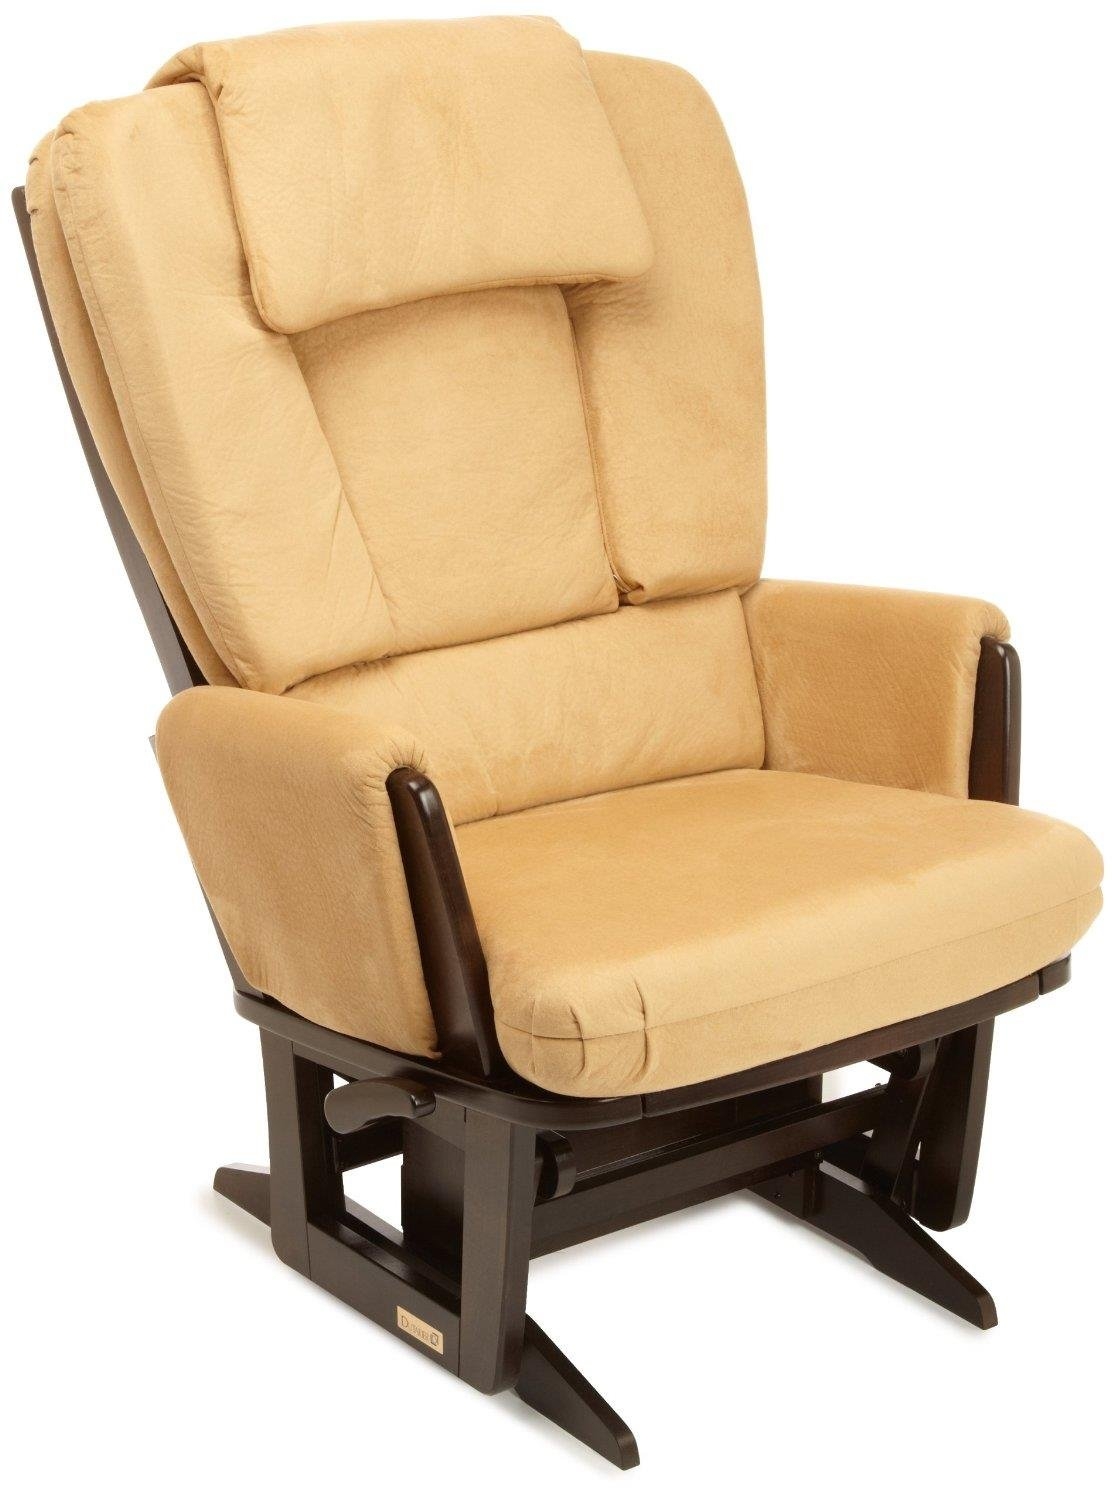 Dutailier Nursing Grand Modern Glider Chair with Built-In Feeding Pillows, Espresso/Camel